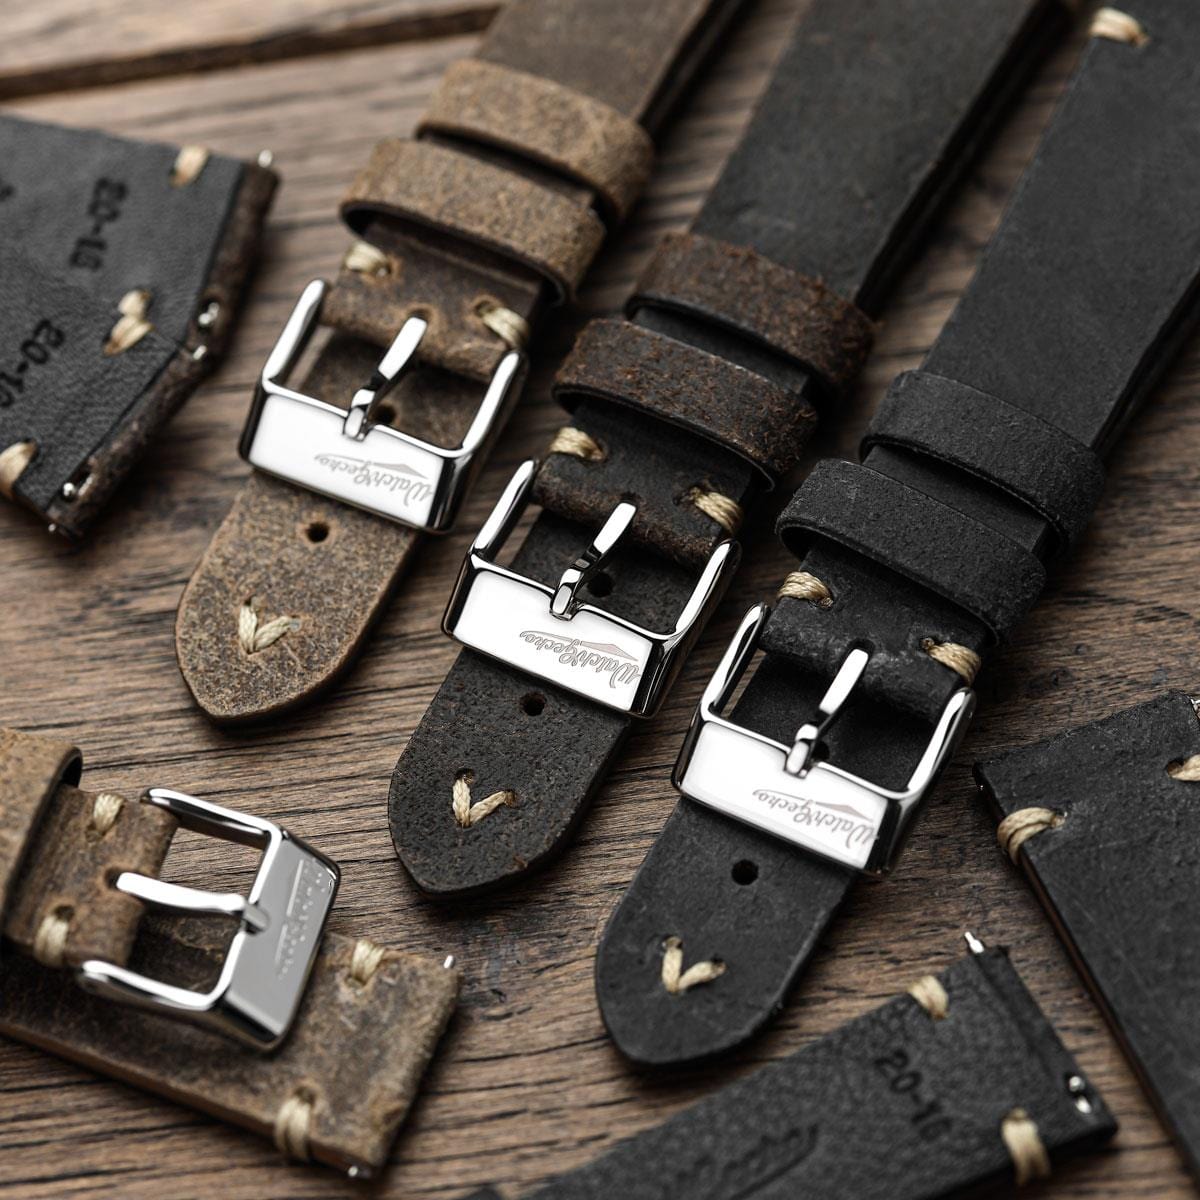 WatchGecko V-Stitch Distressed Leather Watch Strap - Brown